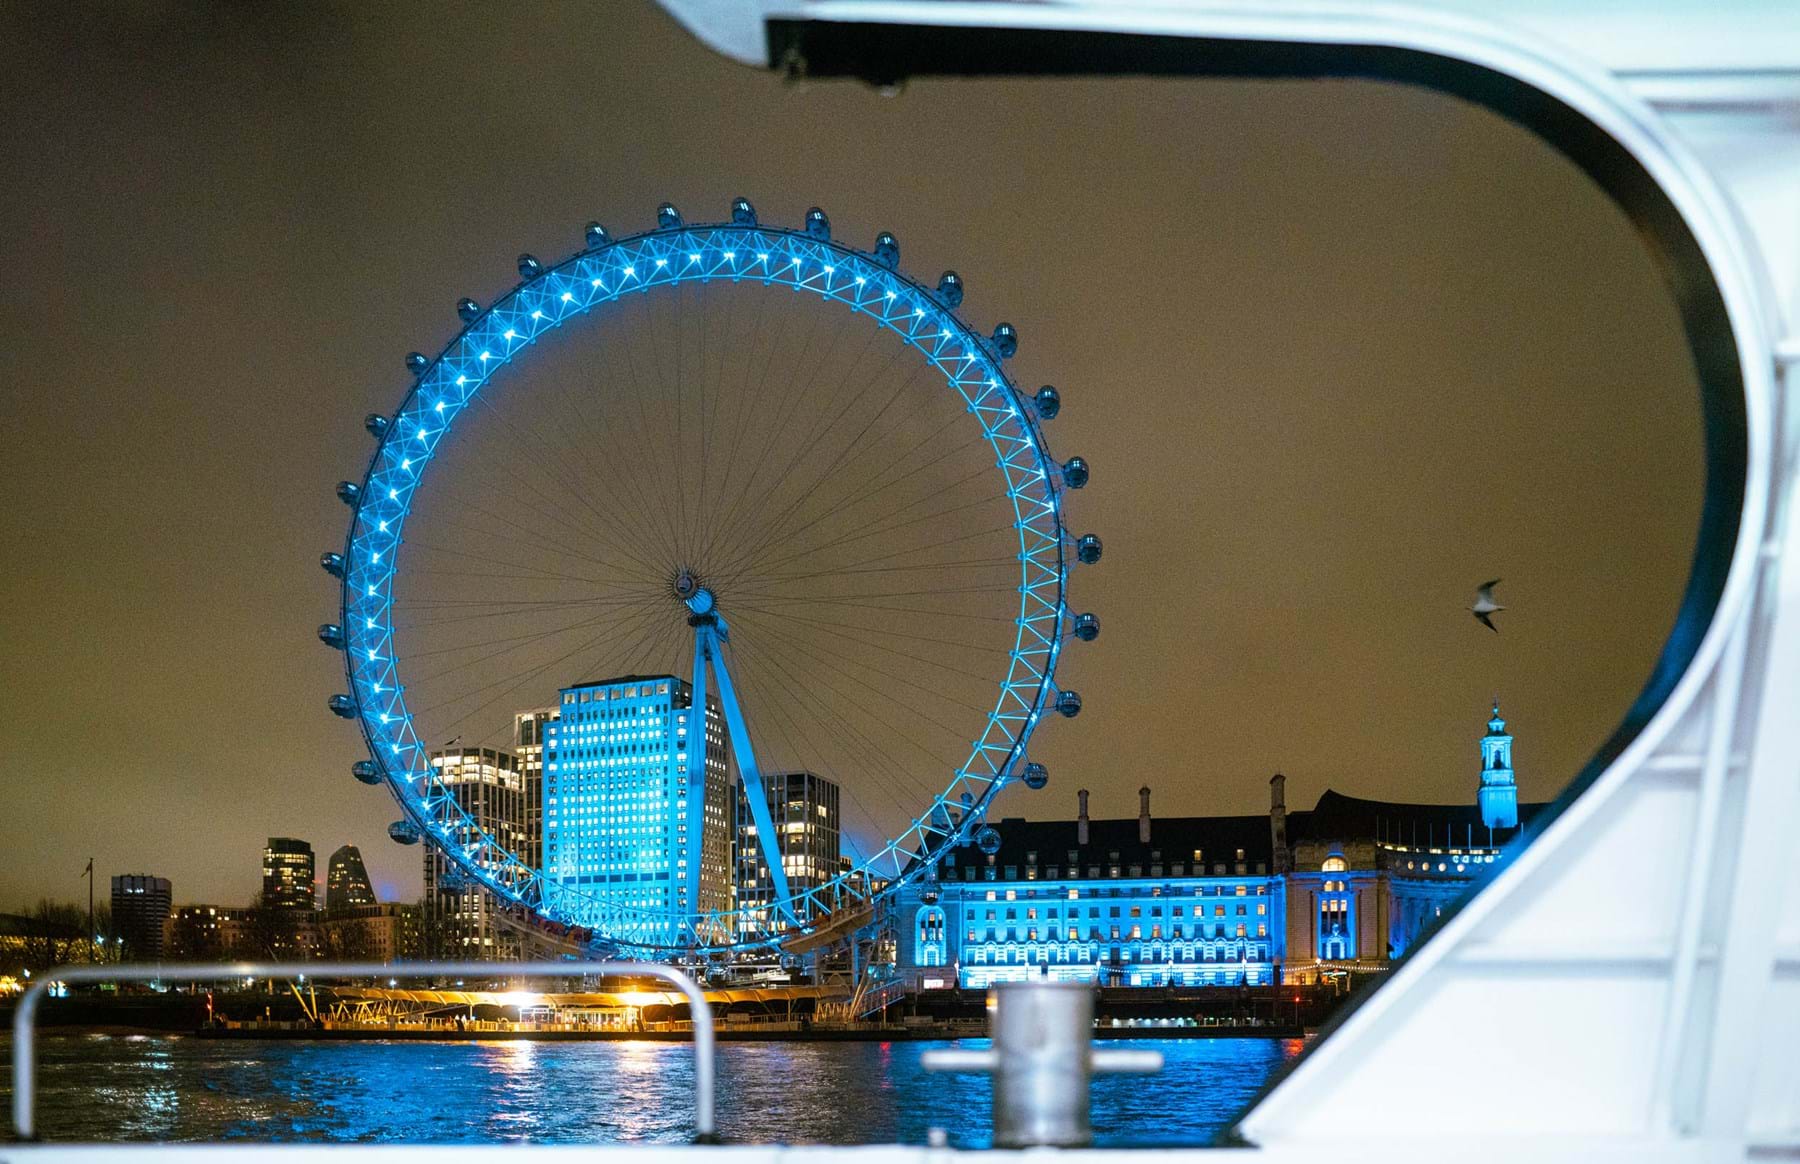 The London Eye at night